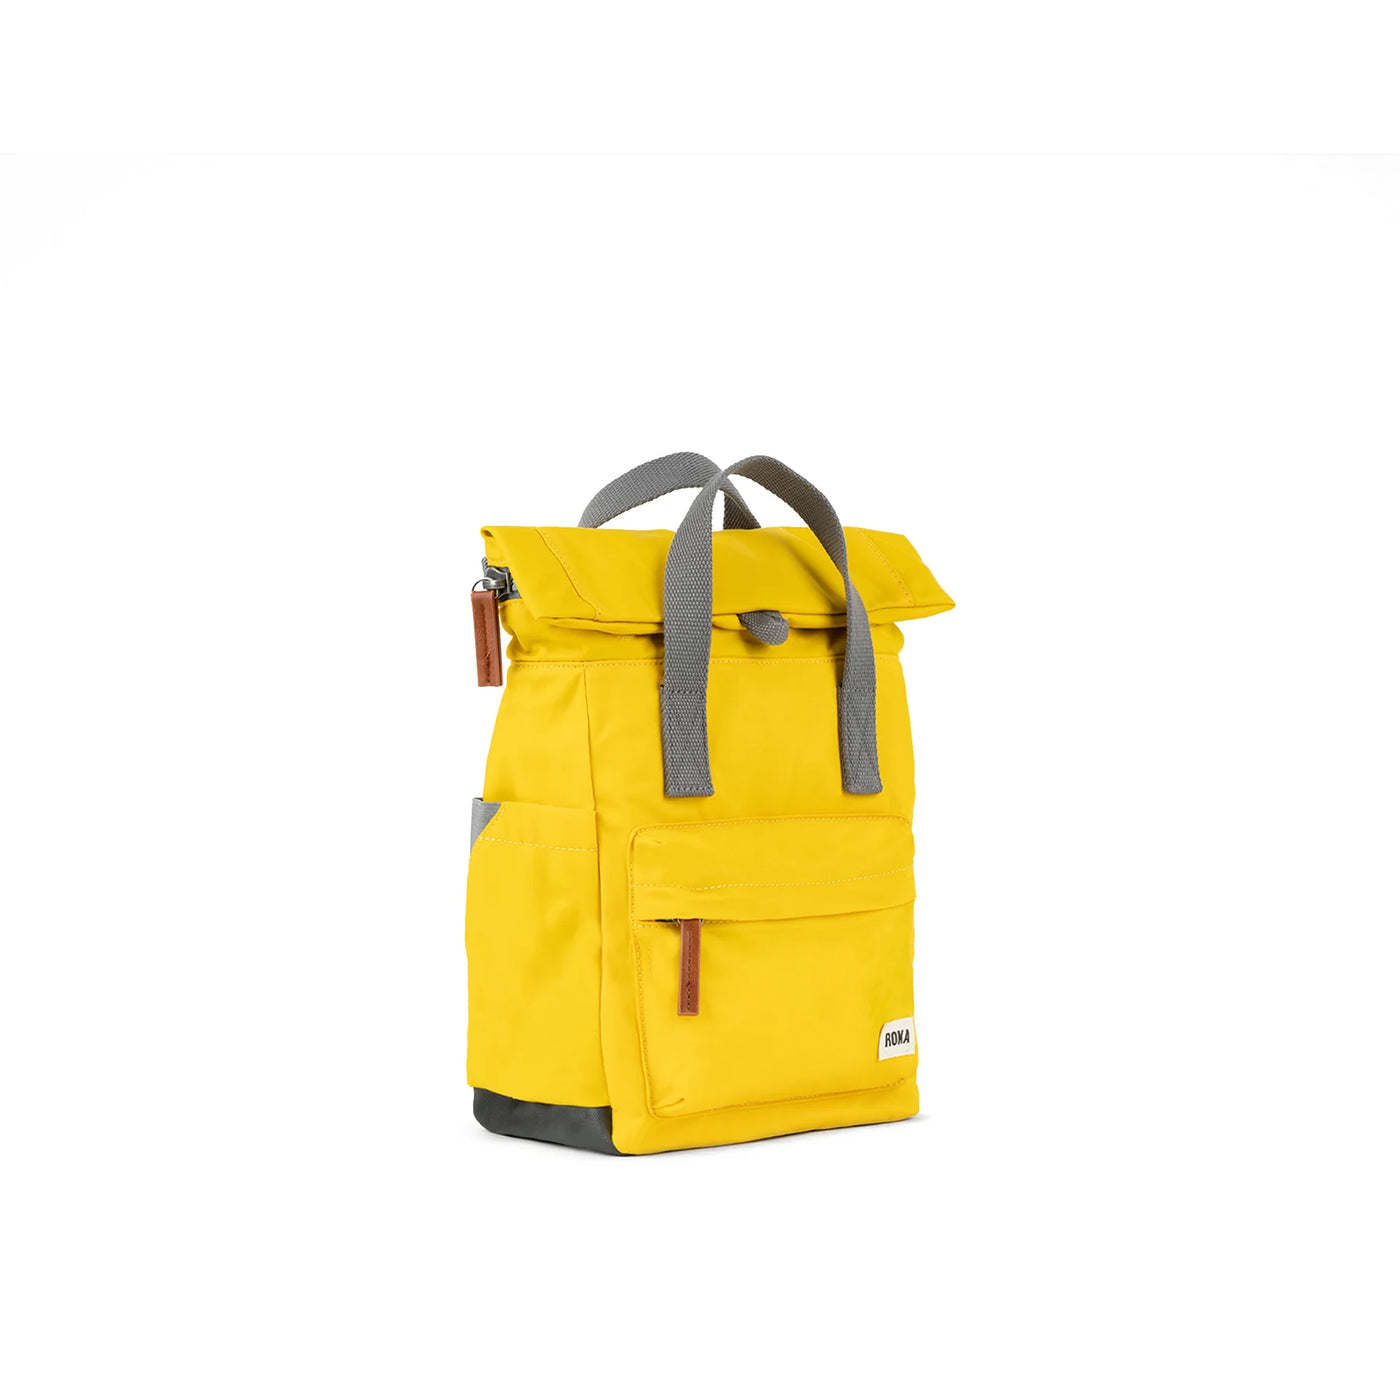 Roka Canfield B Backpack-Recycled Nylon - SMALL - Mustard Yellow